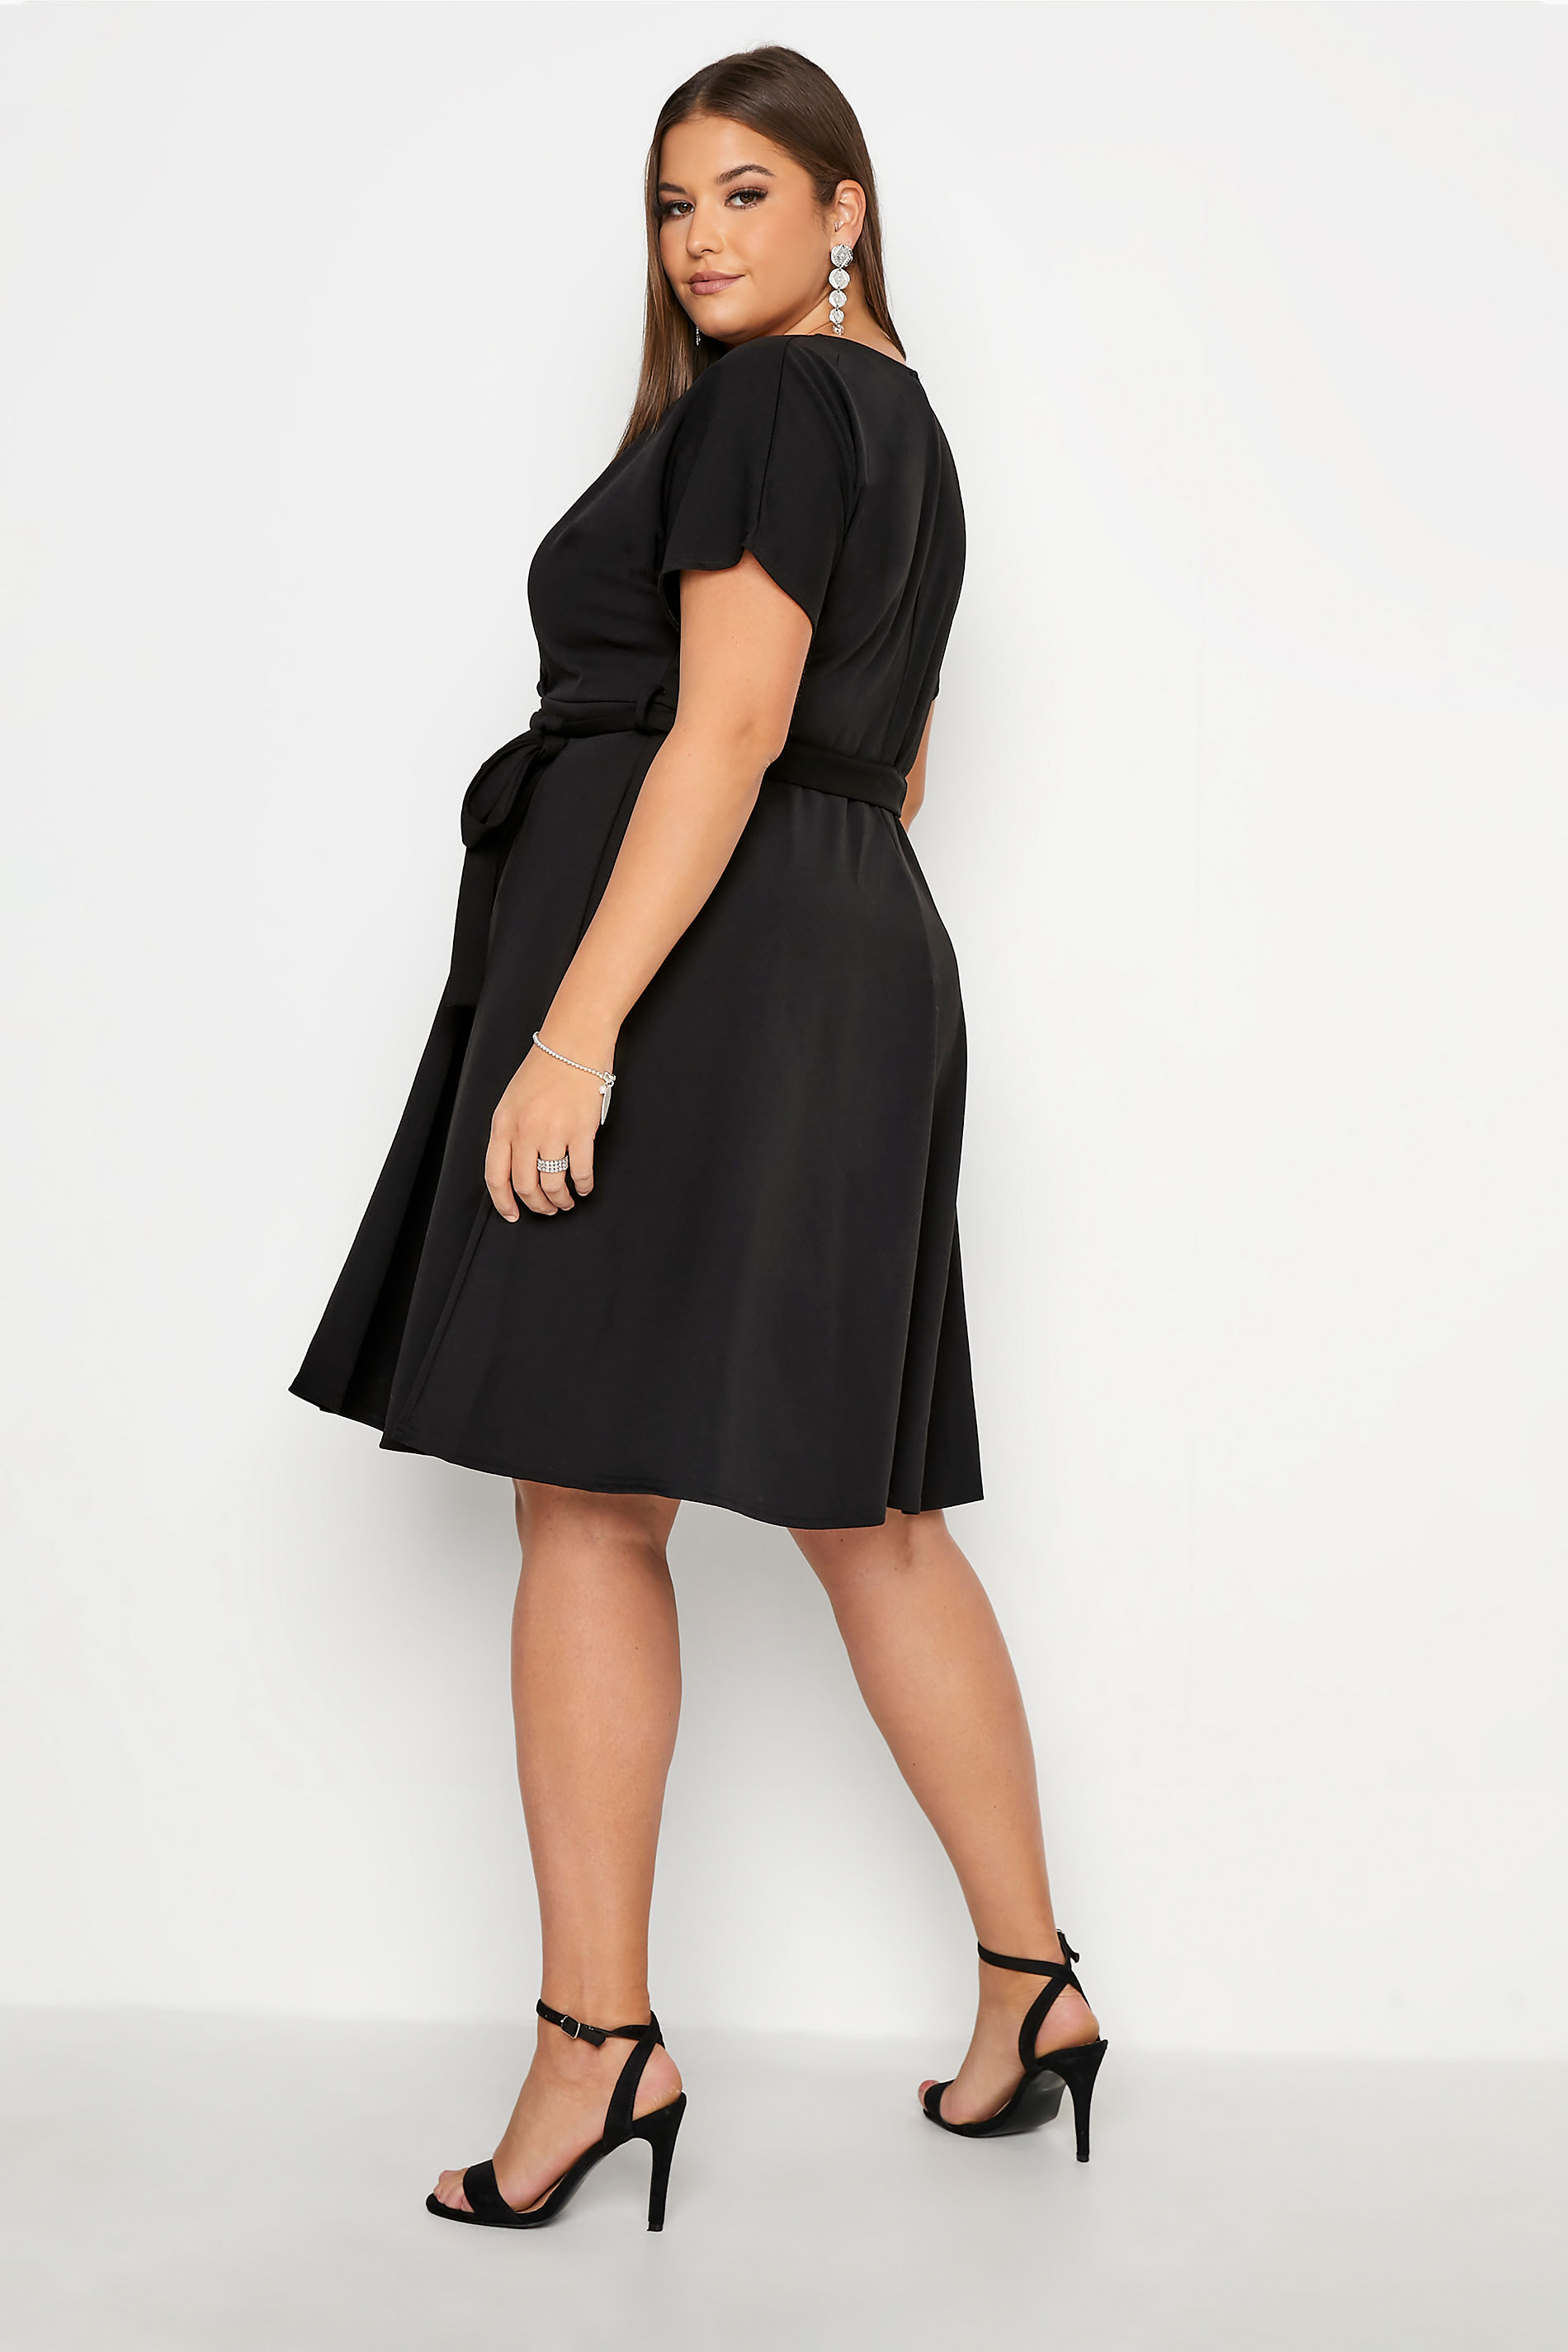 YOURS LONDON Plus Size Black Tie Waist Wrap Midi Dress | Yours Clothing 3